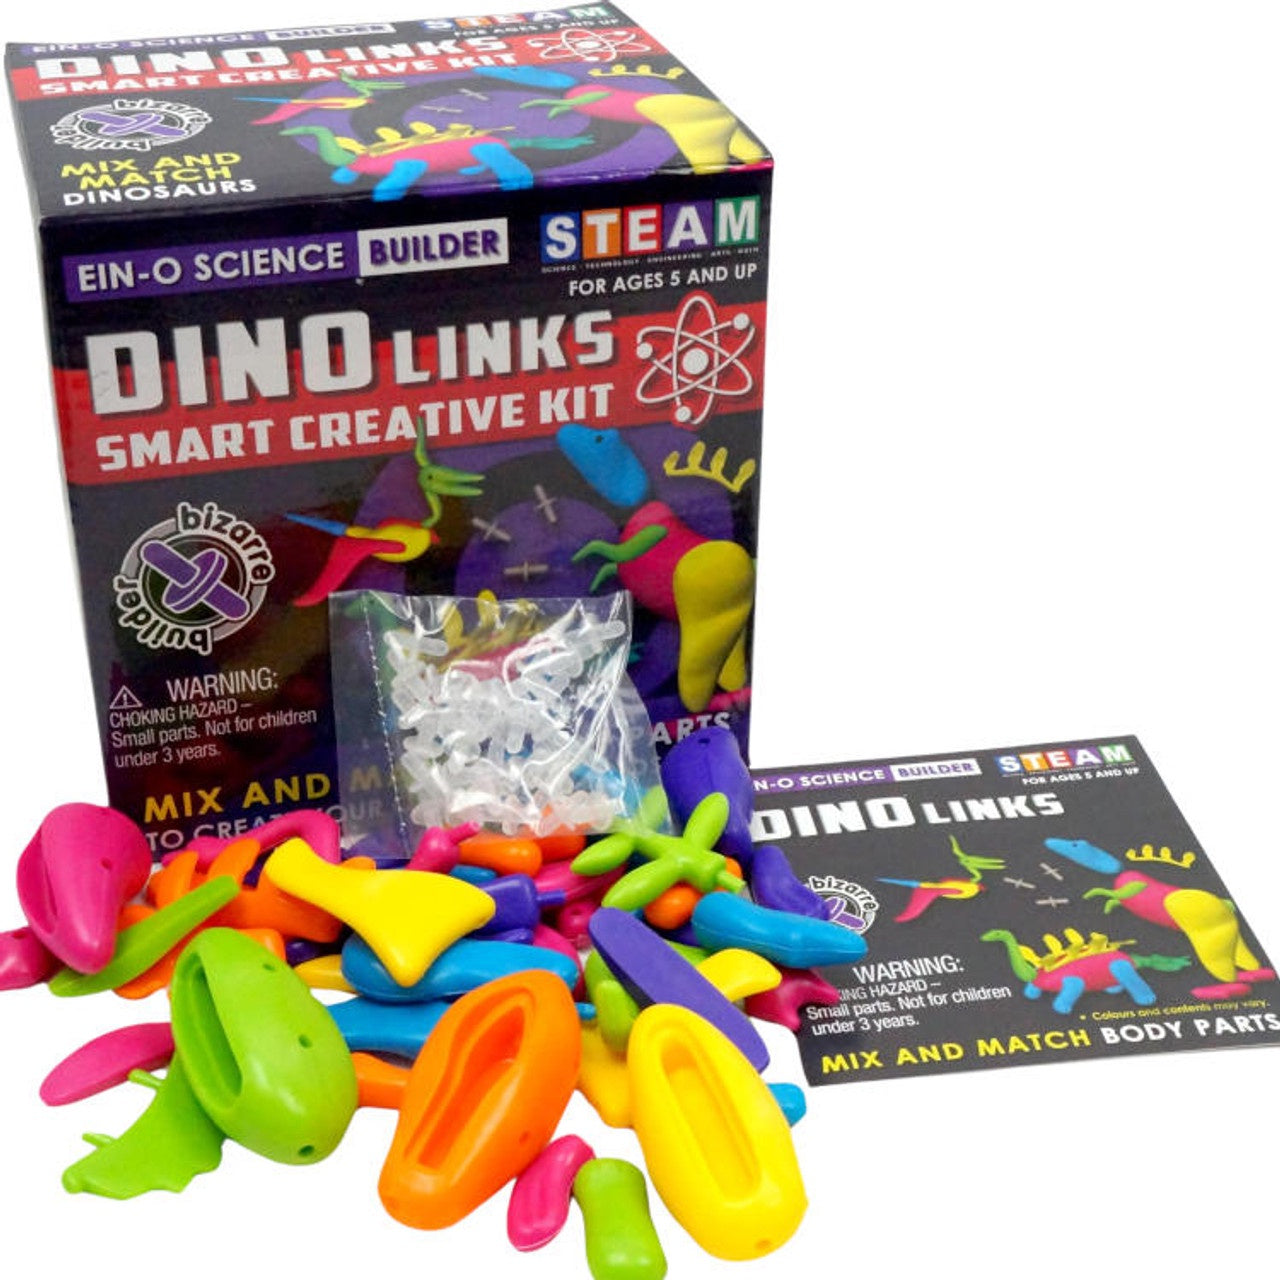 Steam Dino Links Creative Kit